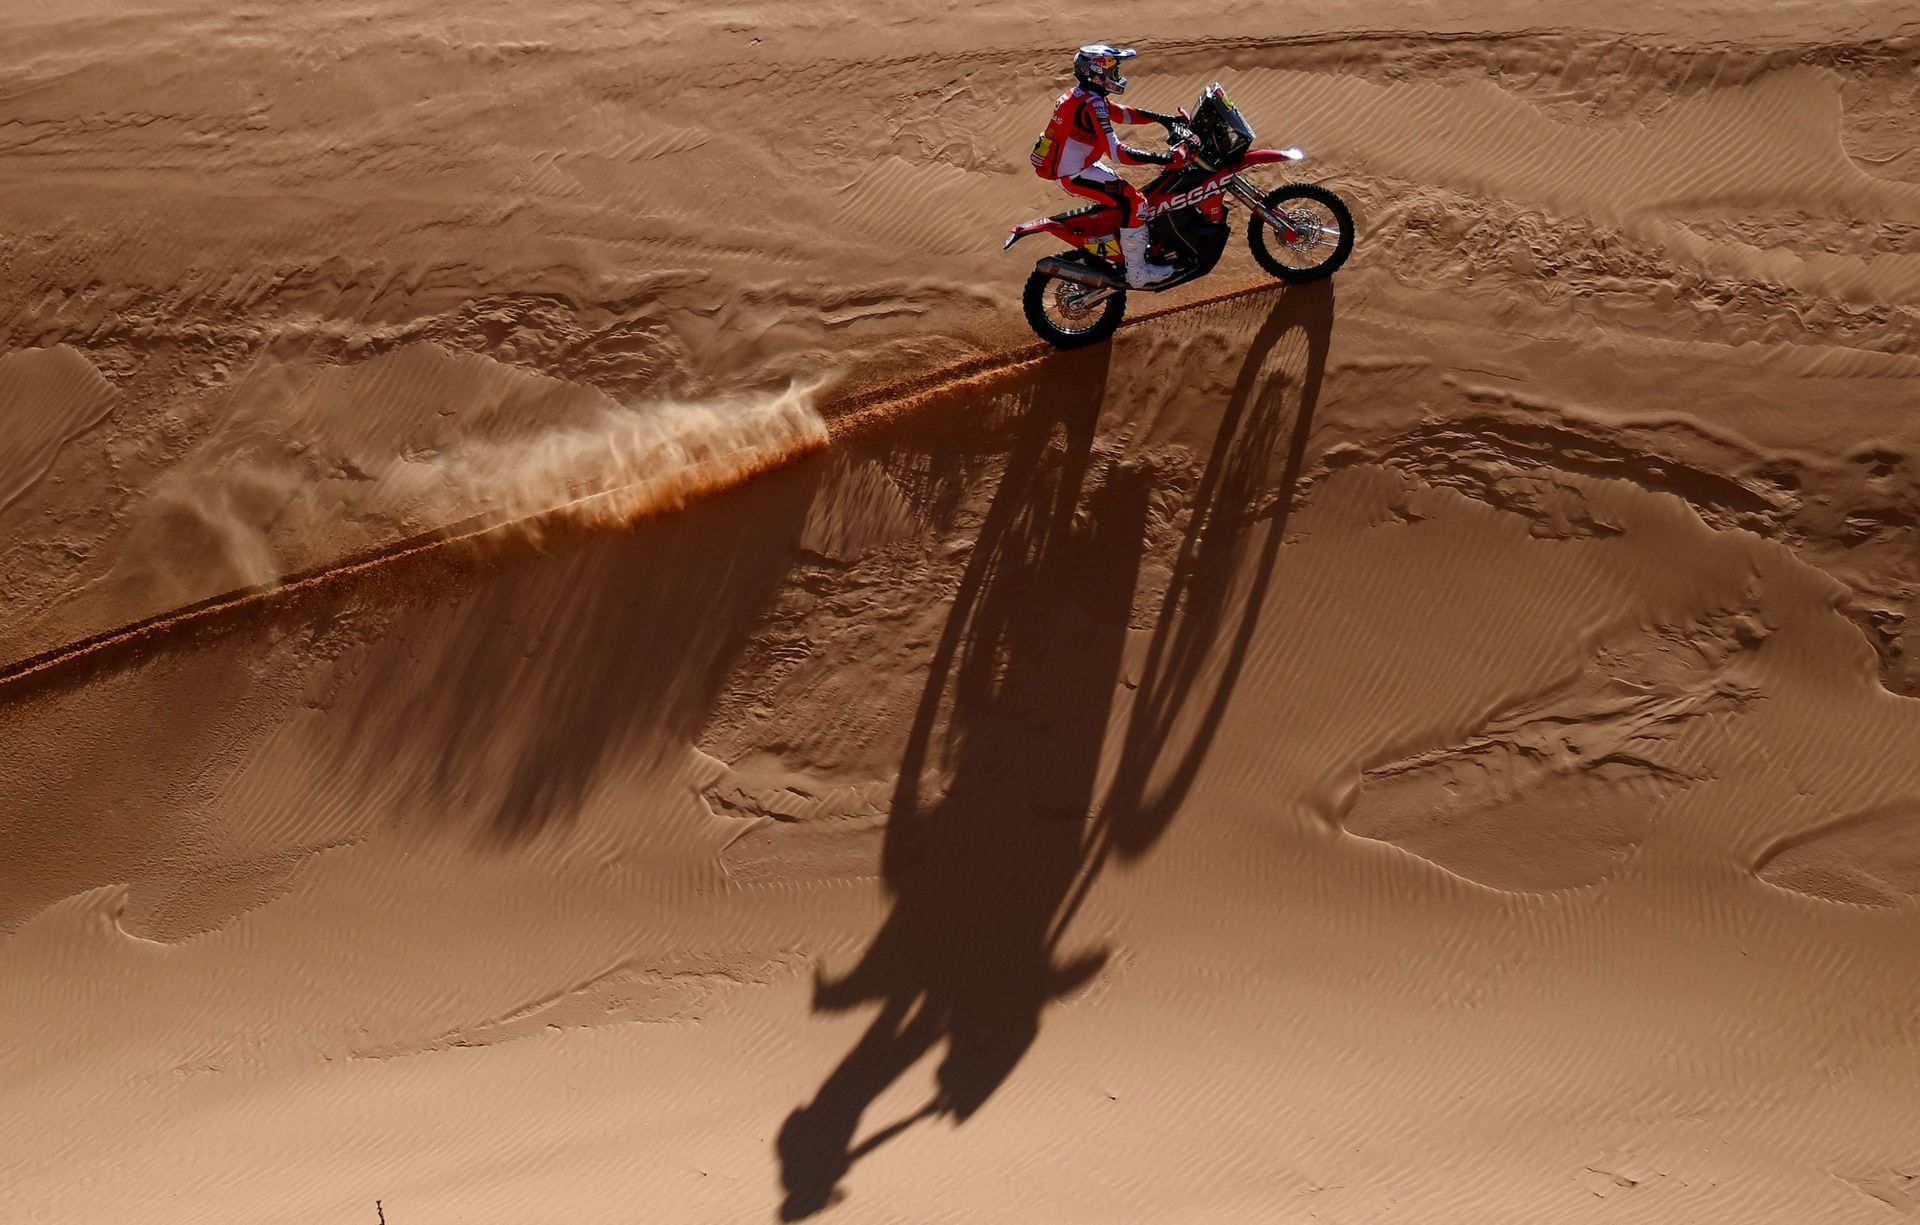 El piloto australiano Daniel Sanders compite durante la etapa 4 del Dakar 2022 entre al-Qaysumah y Riyadh en Arabia Saudita